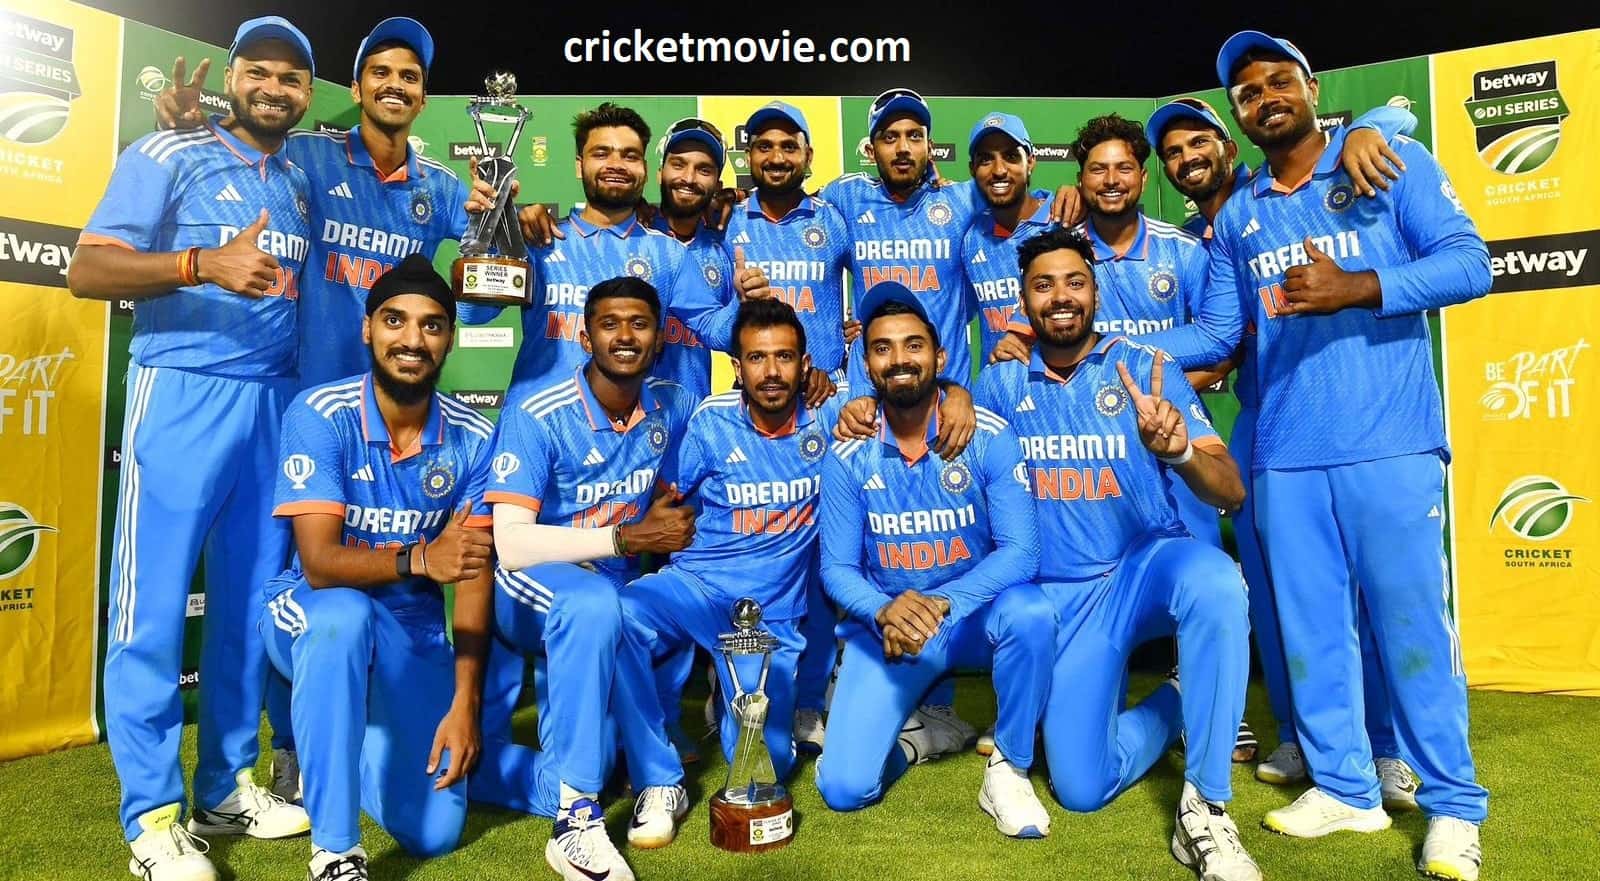 Team India won ODI series against South Africa-cricketmovie.com